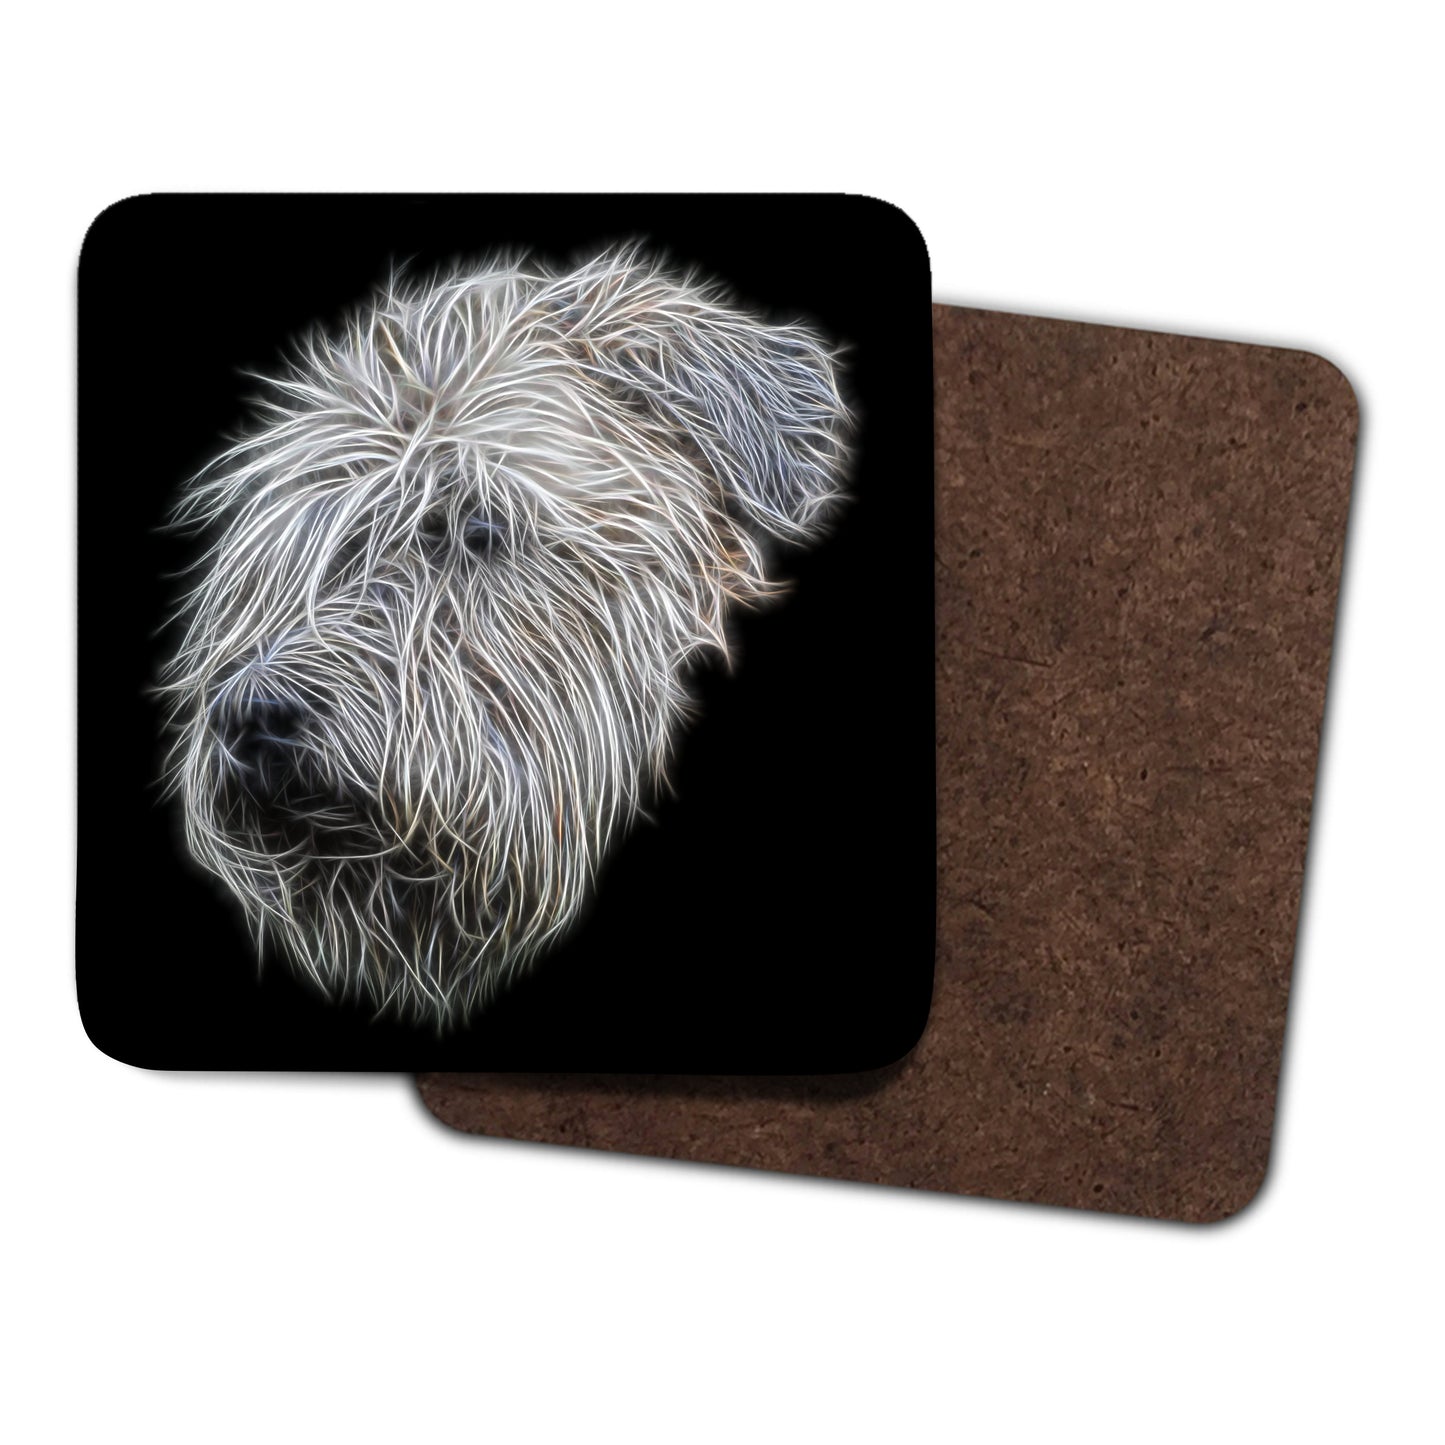 Wheaten Terrier Coasters, Set of 2, with Stunning Fractal Art Design.